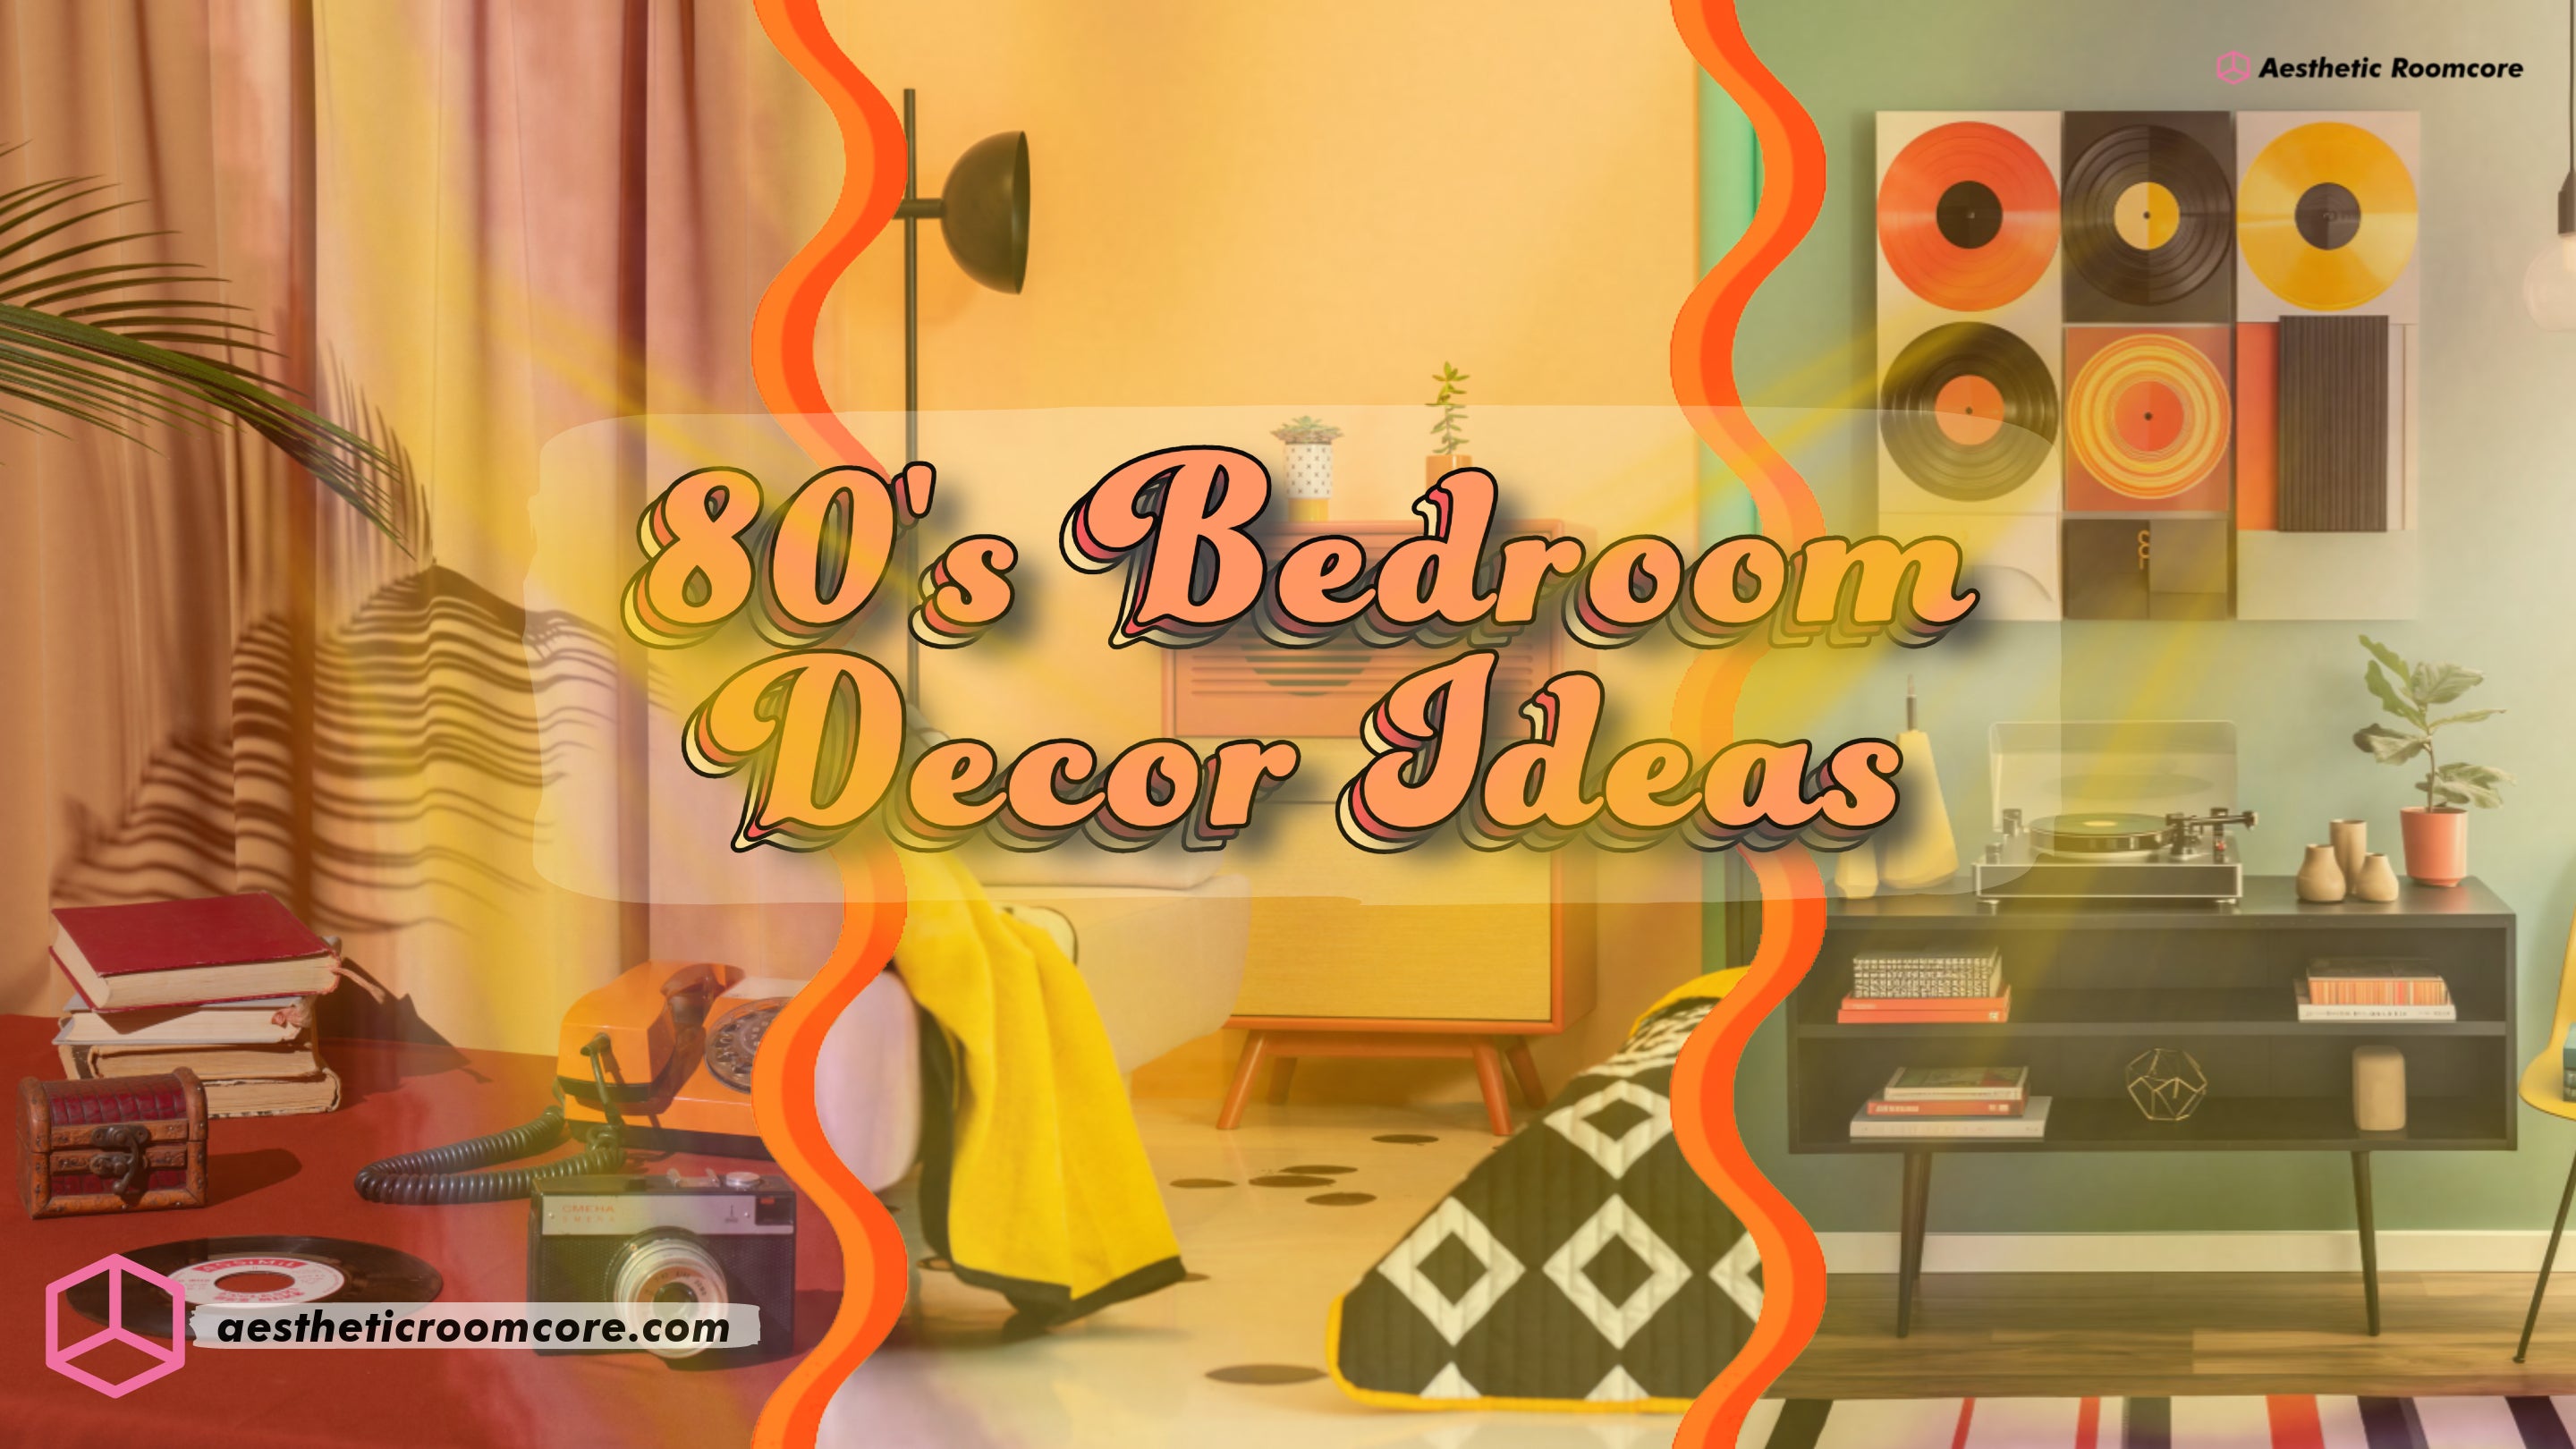 80's bedroom decor ideas